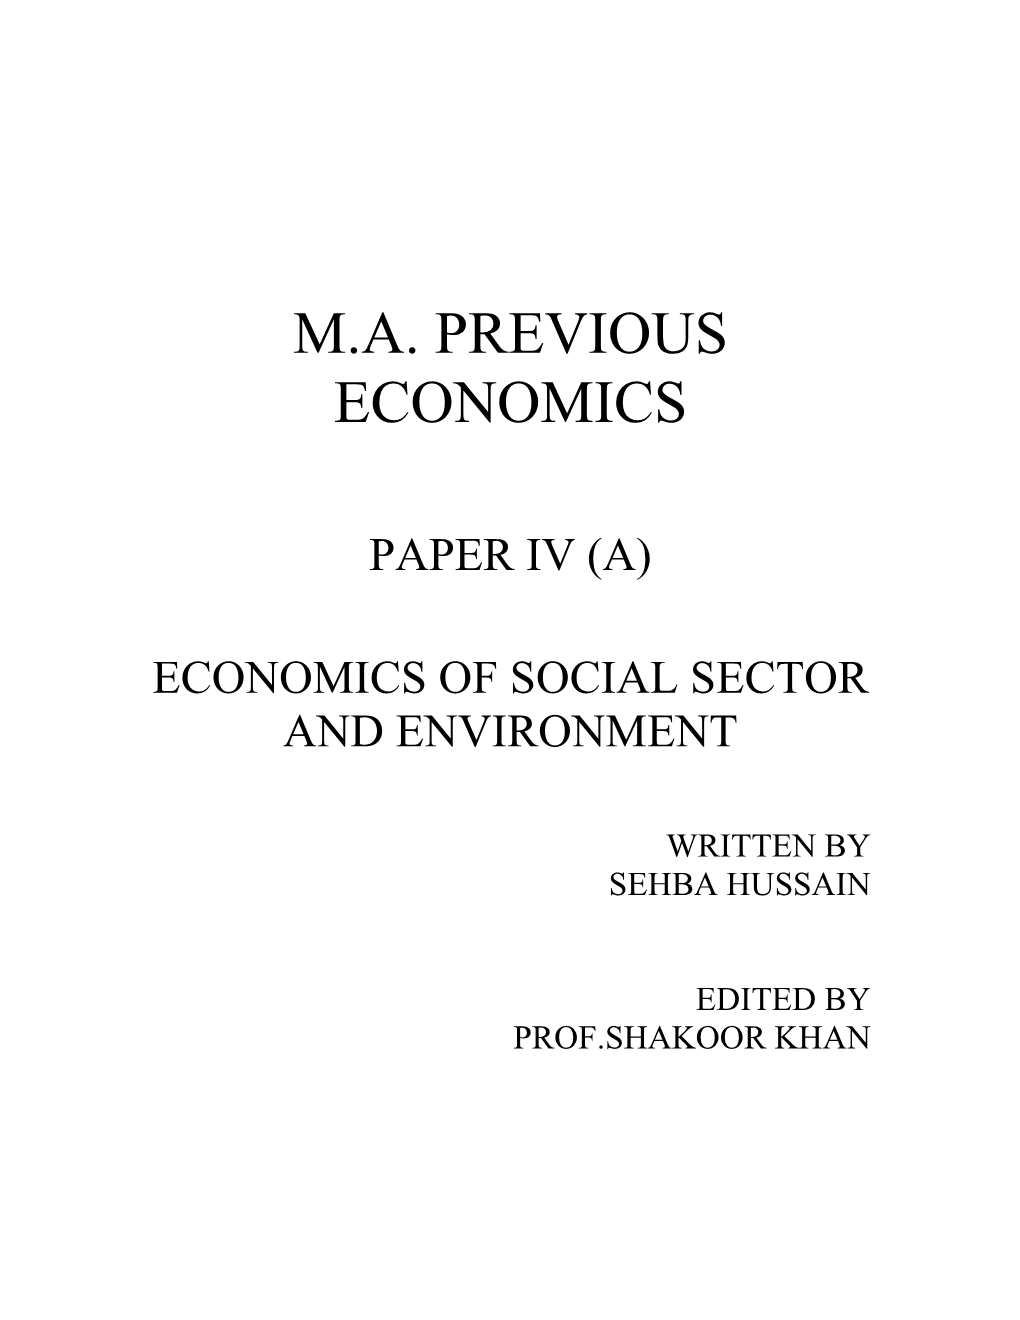 M.A. Previous Economics